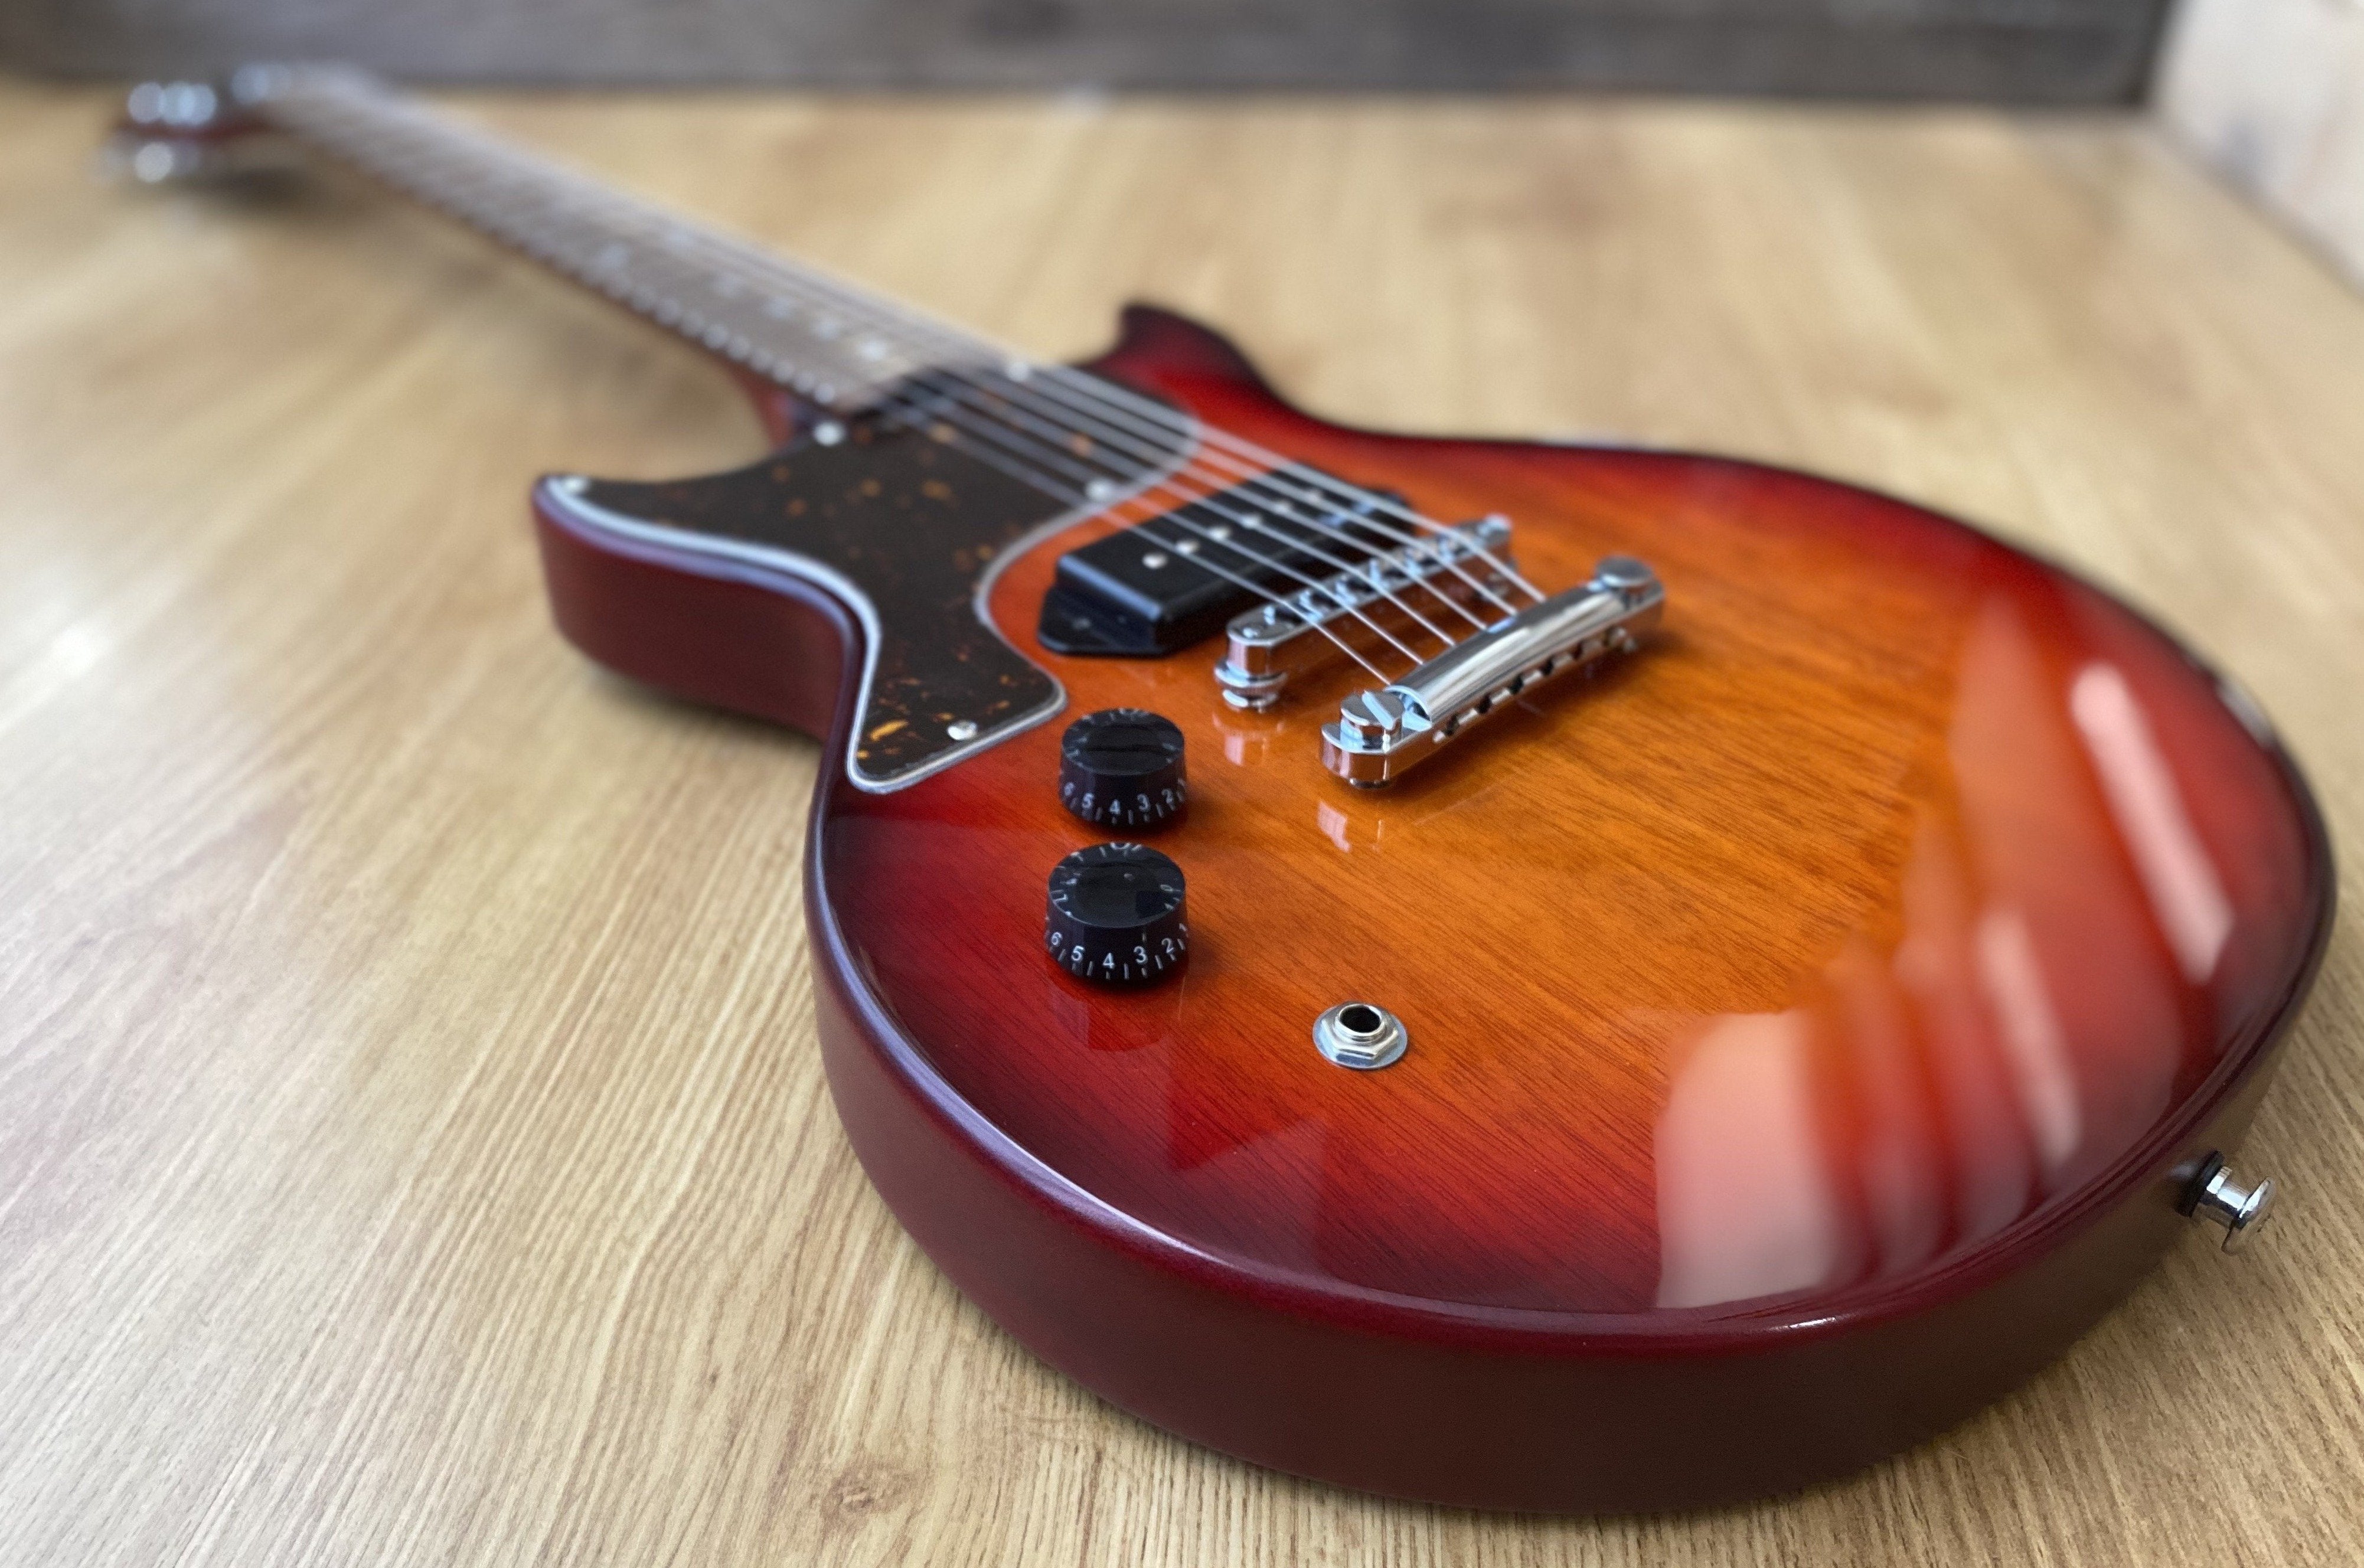 Gordon Smith GS1 Autumn Burst Left Handed Custom, Electric Guitar for sale at Richards Guitars.